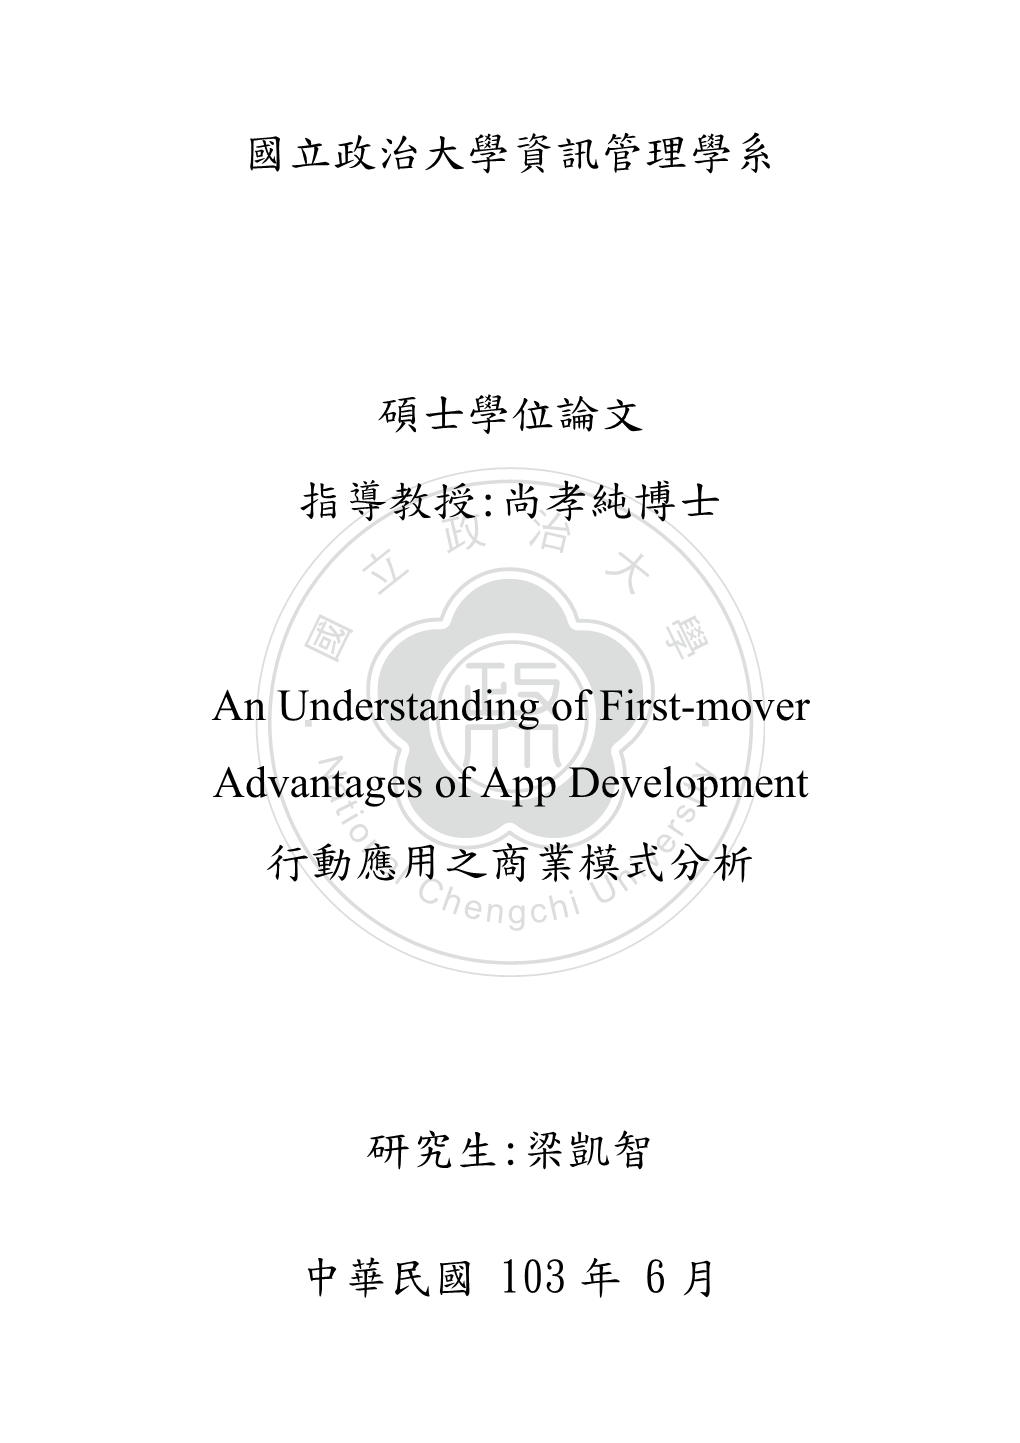 尚孝純博士 an Understanding of First-Mover Advantages